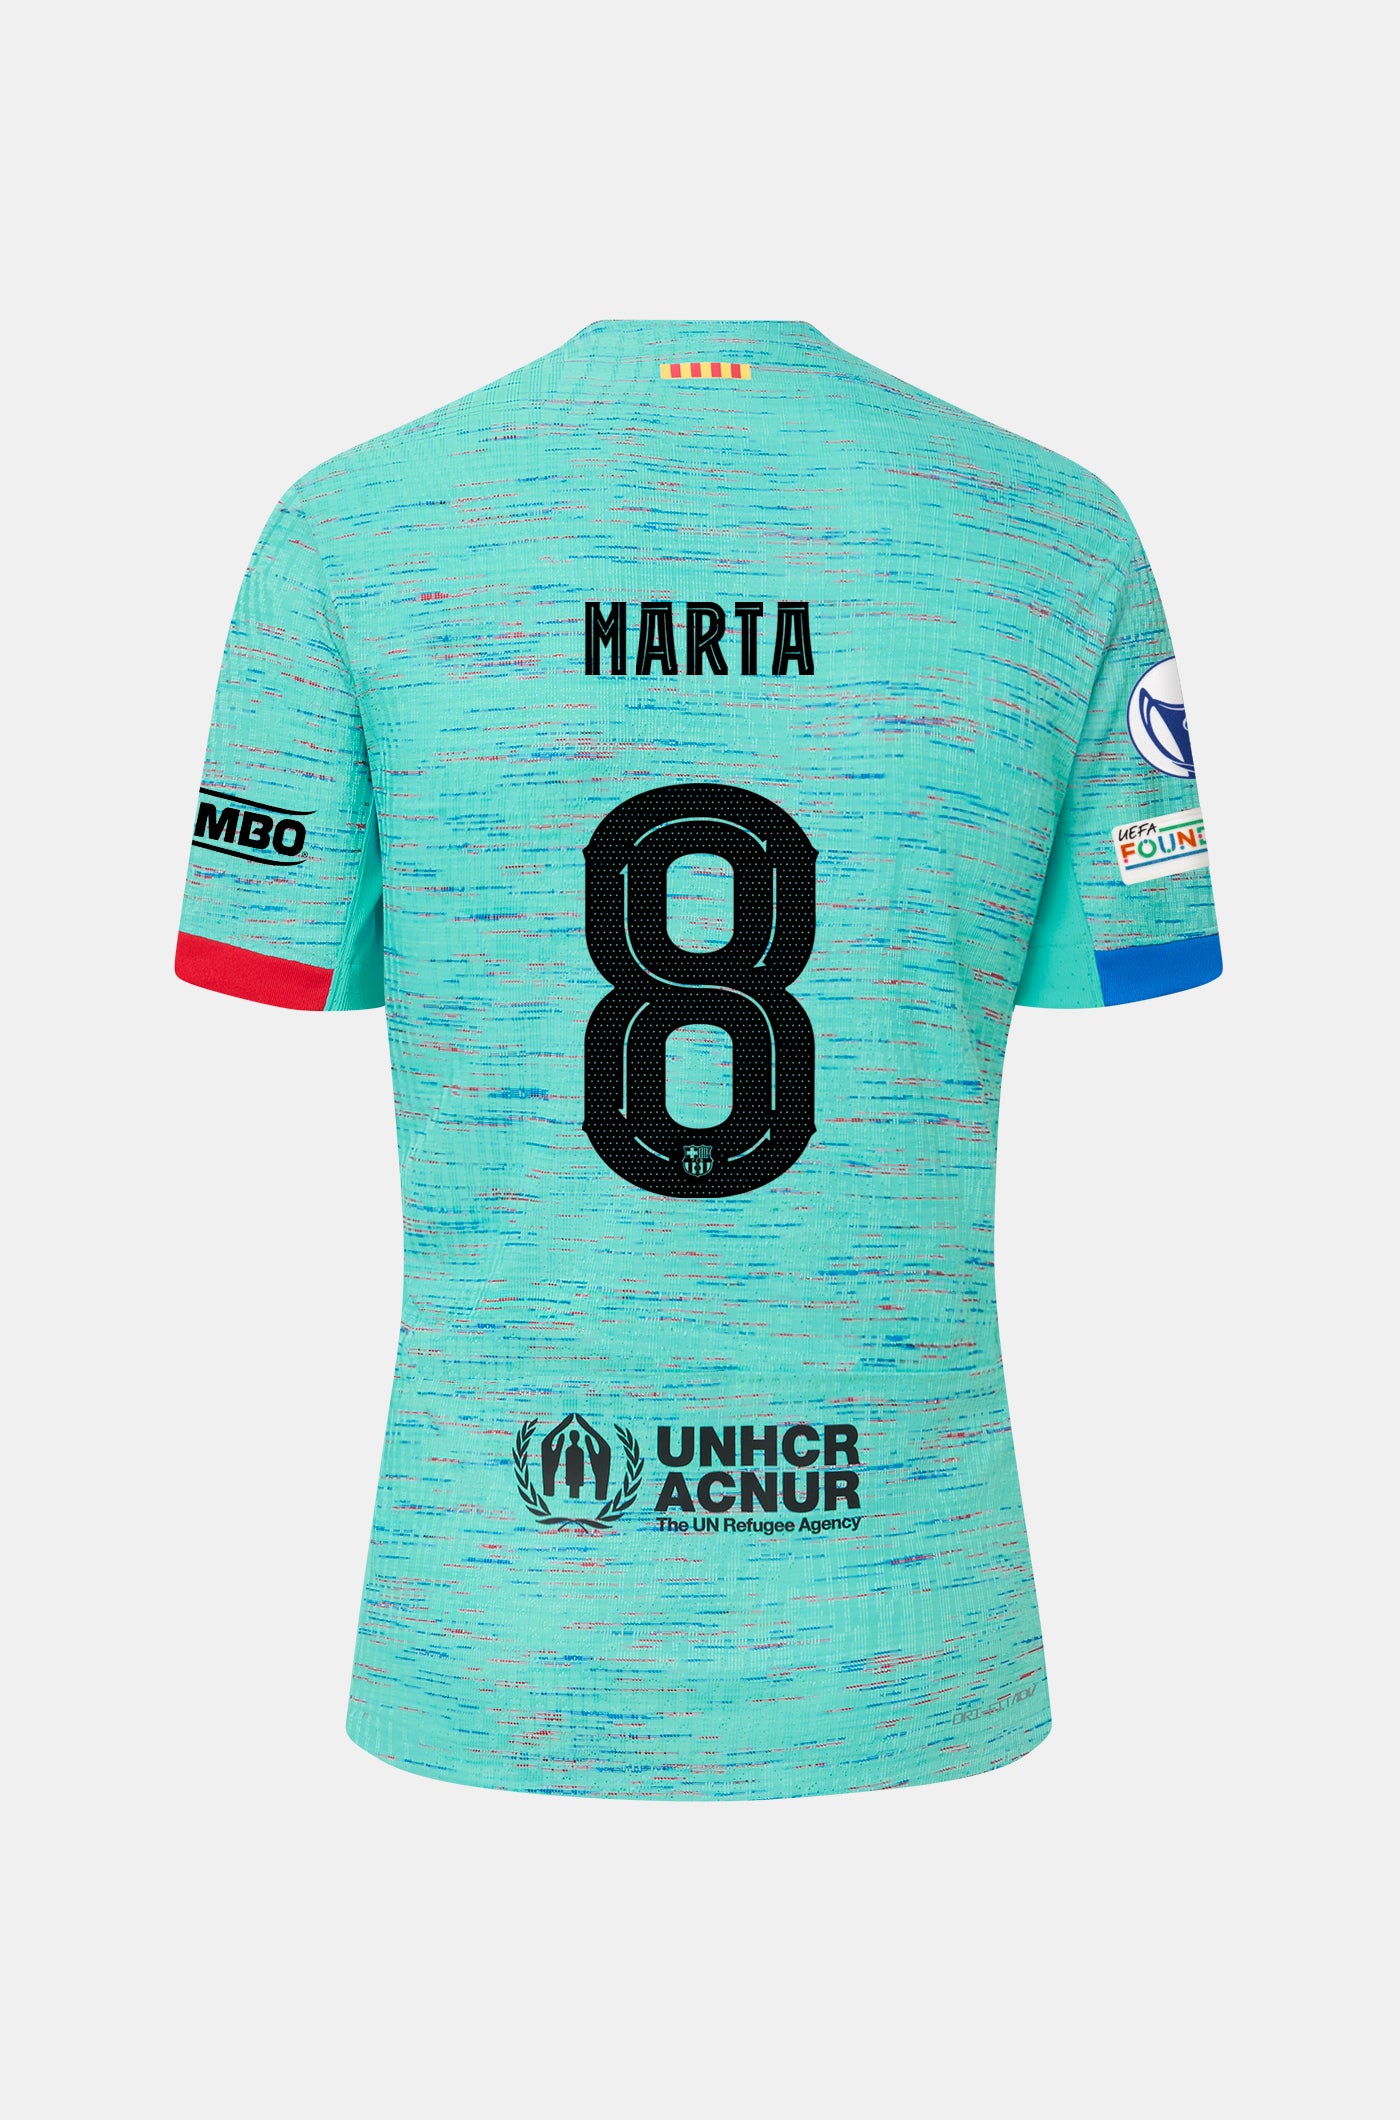 UWCL FC Barcelona third shirt 23/24 Player's Edition - MARTA